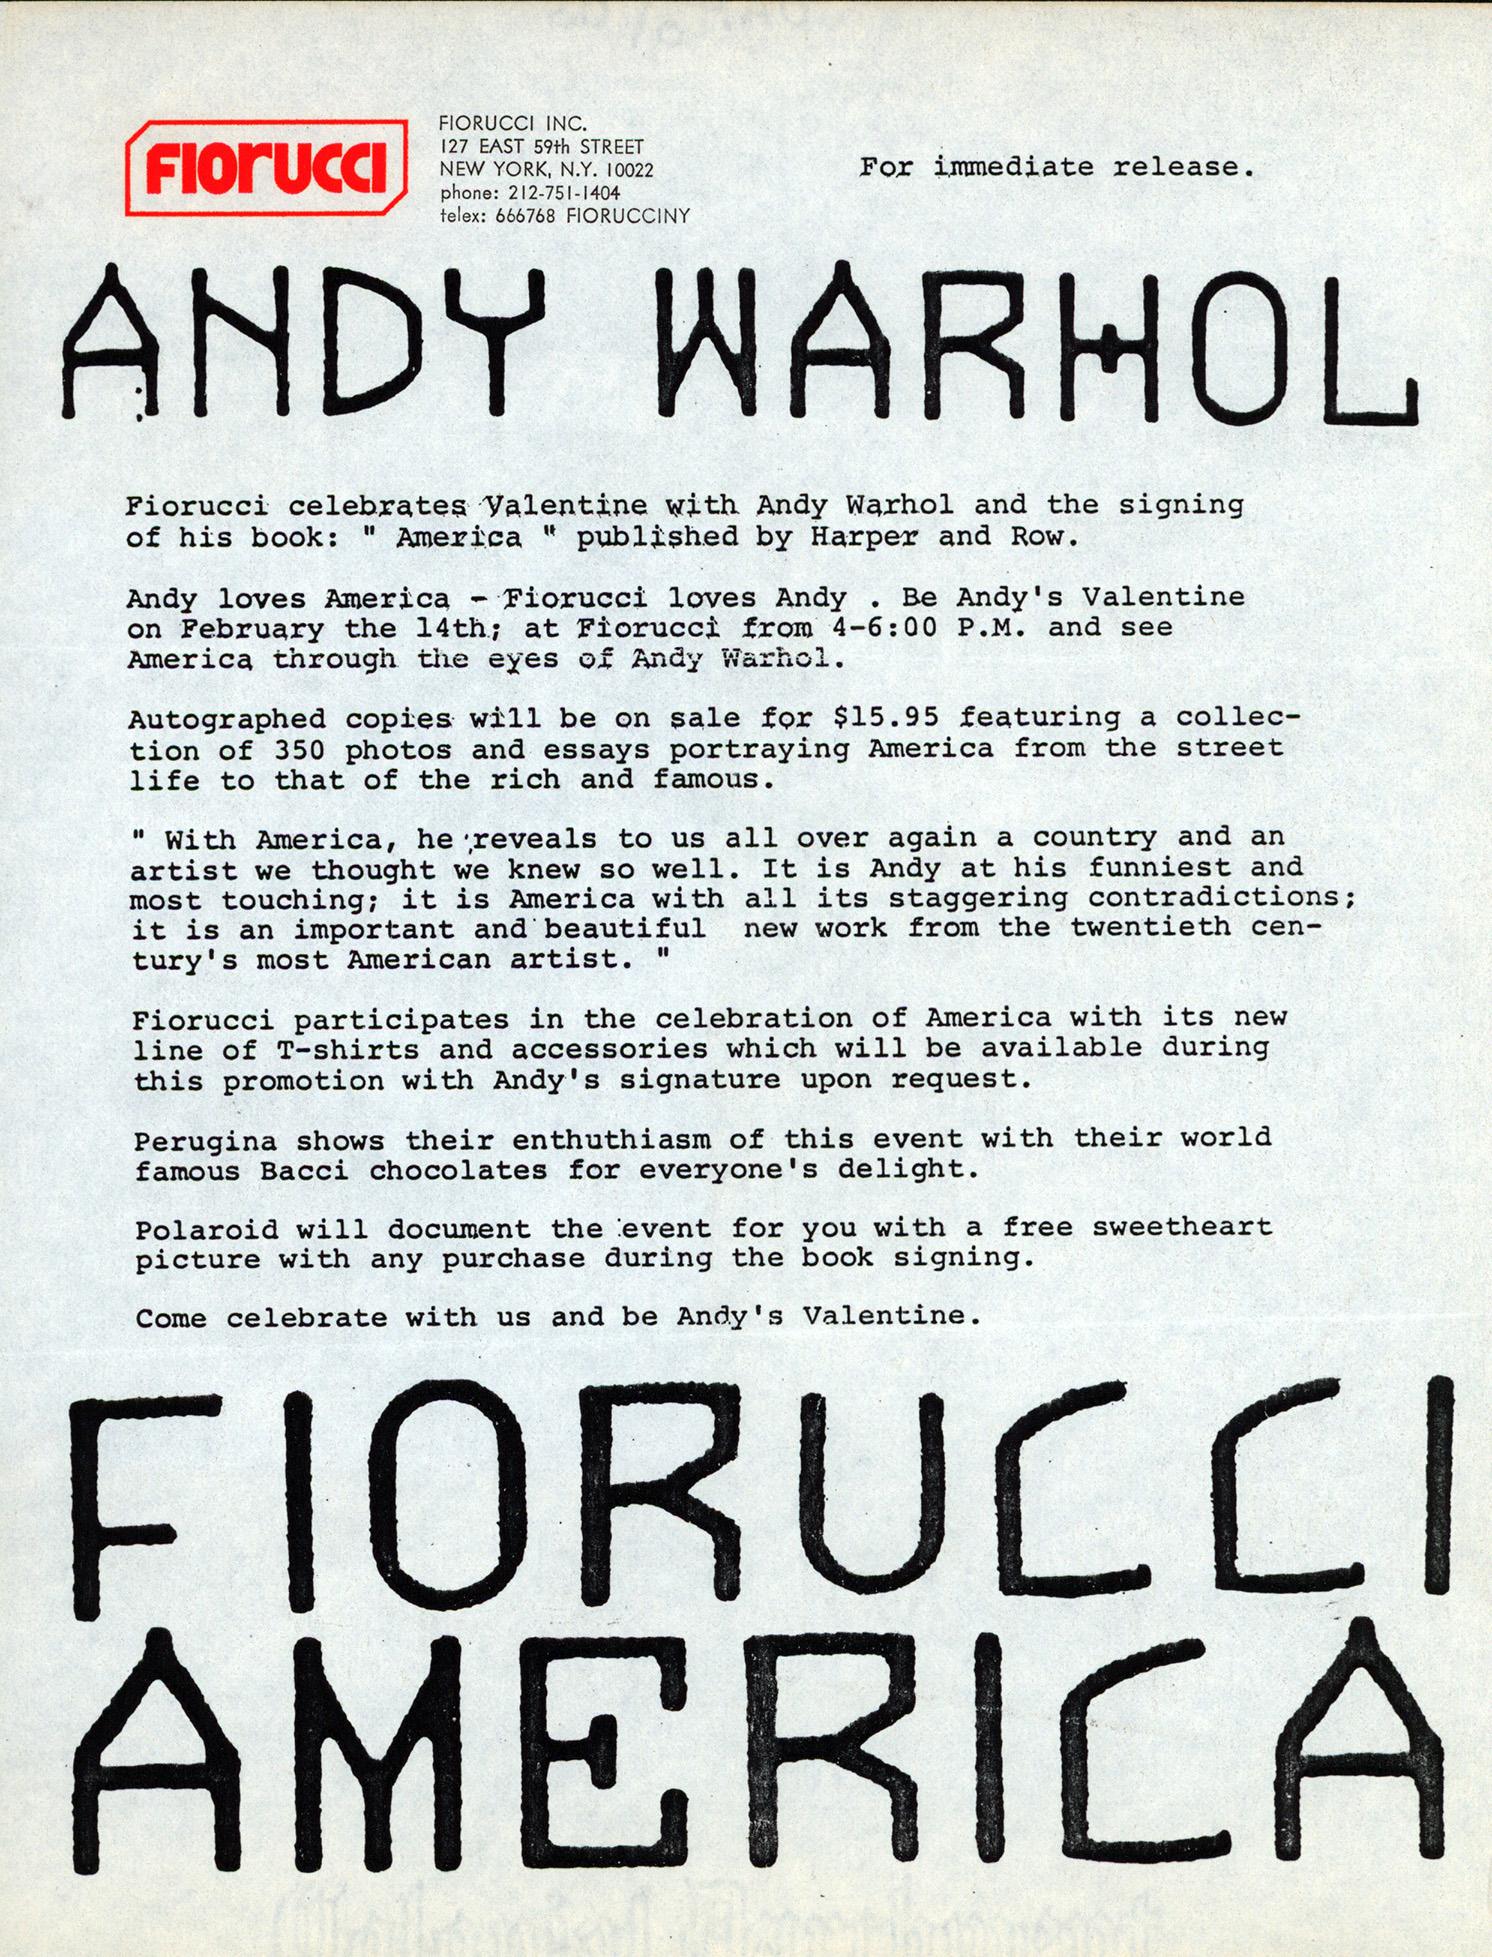 Andy Warhol Fiorucci 1986 (vintage Andy Warhol America)  - Print by (after) Andy Warhol